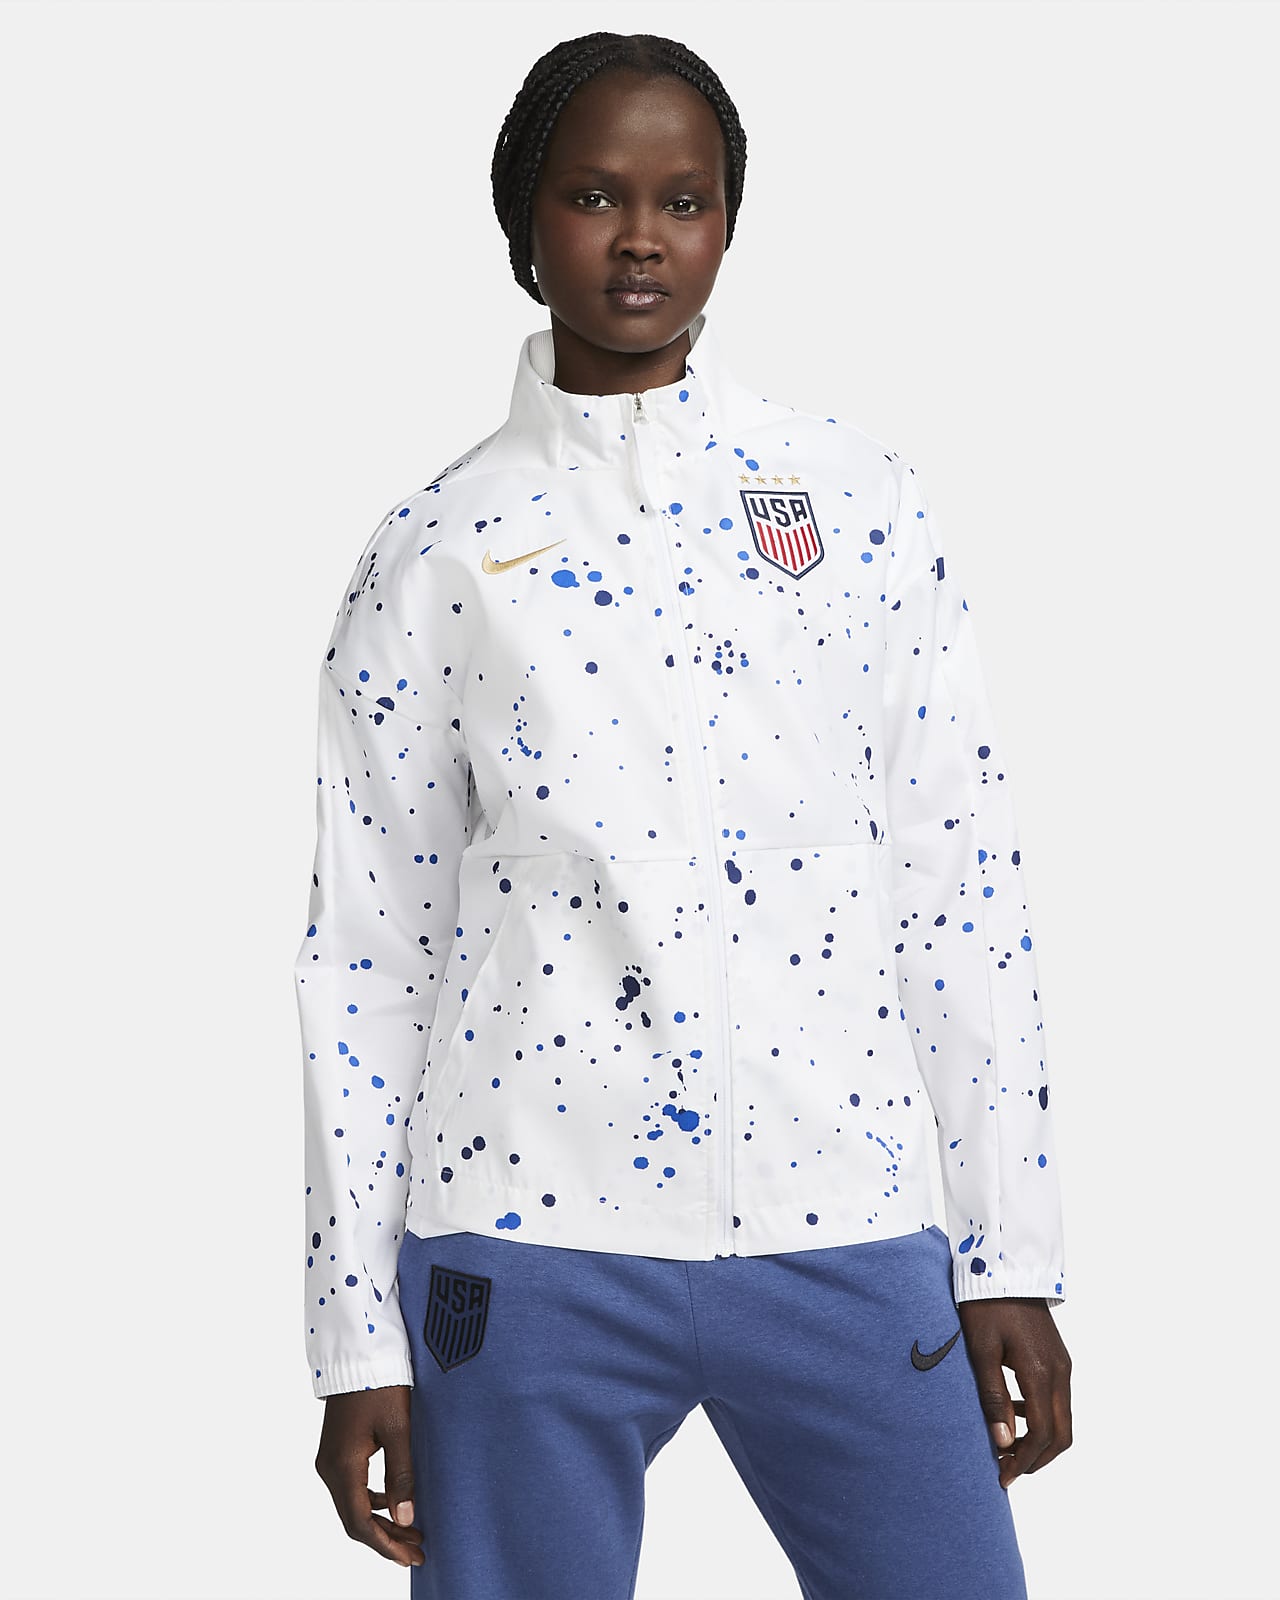 Ananiver Fervent Blind vertrouwen U.S. Women's Nike Dri-FIT Anthem Soccer Jacket. Nike.com